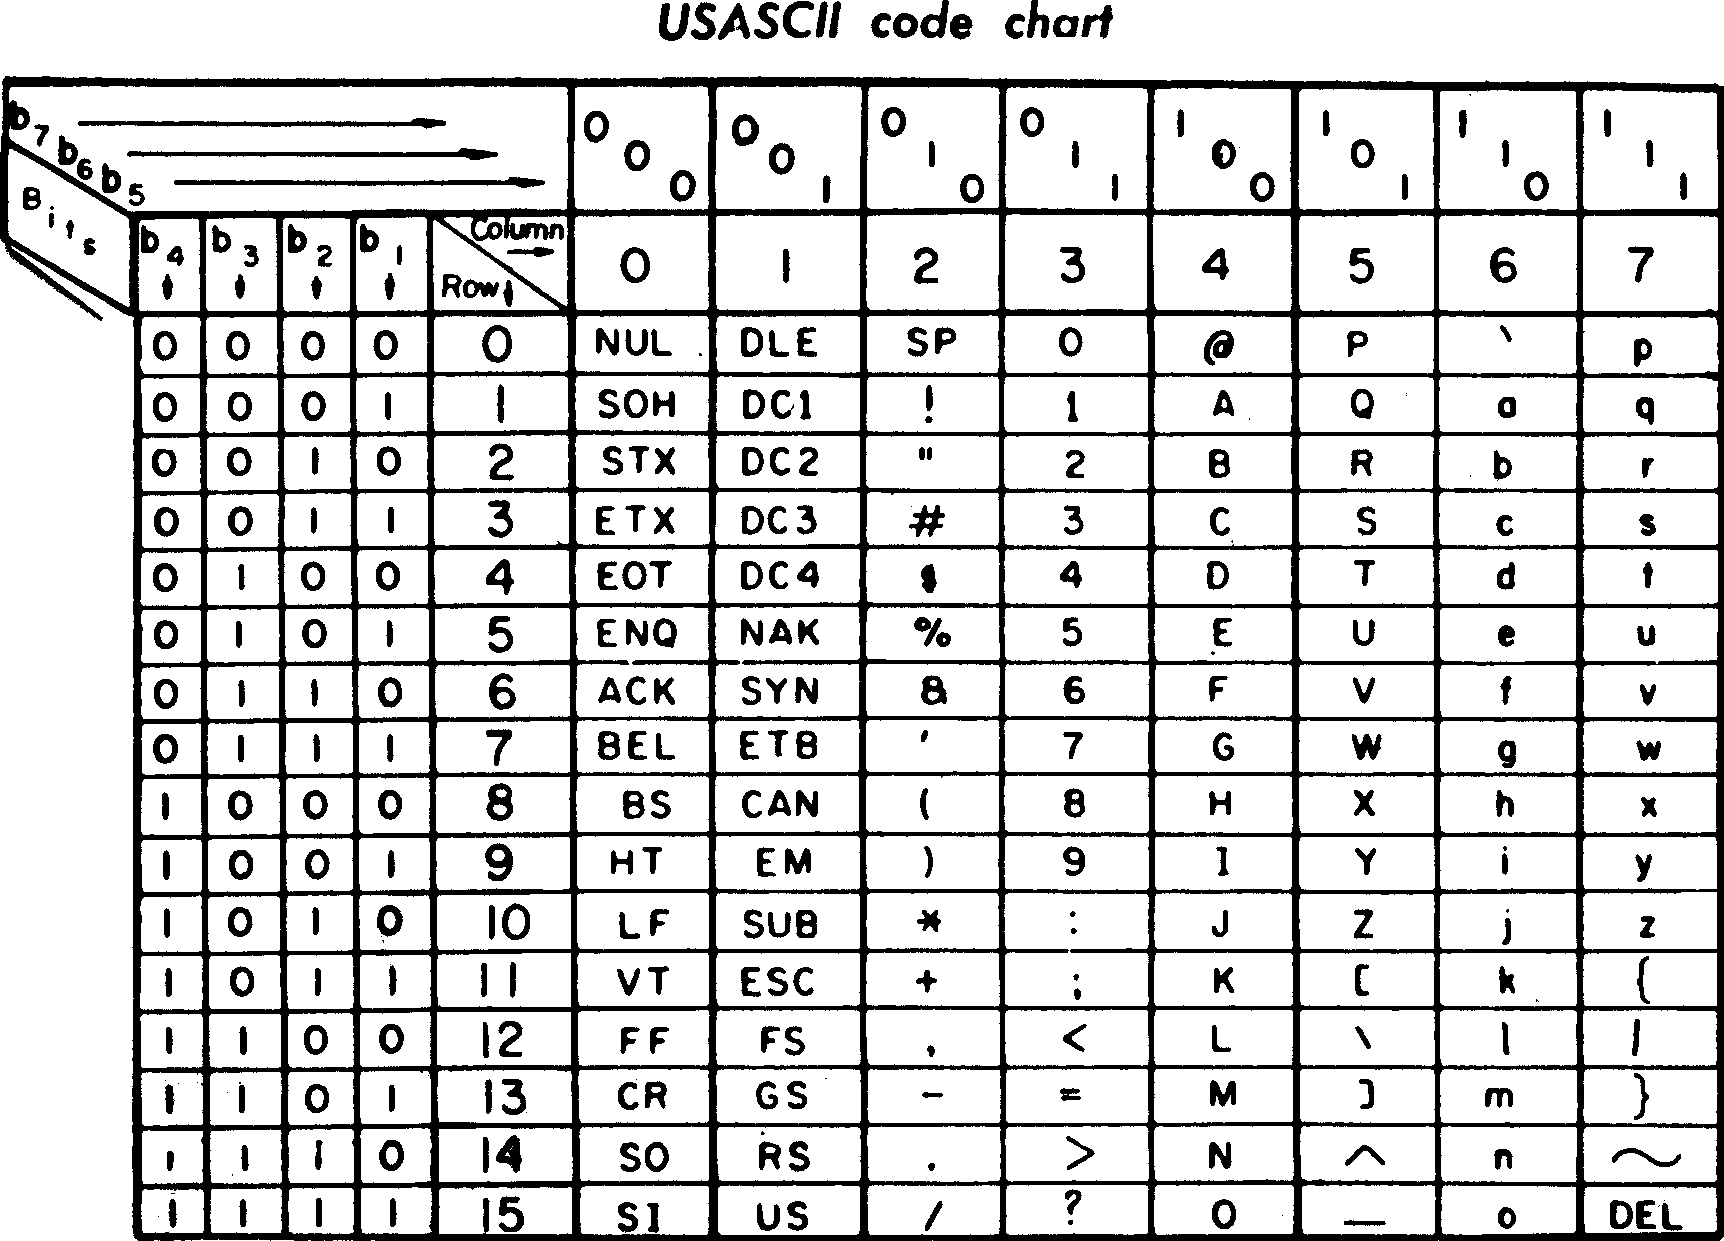 جدول کد USASCII